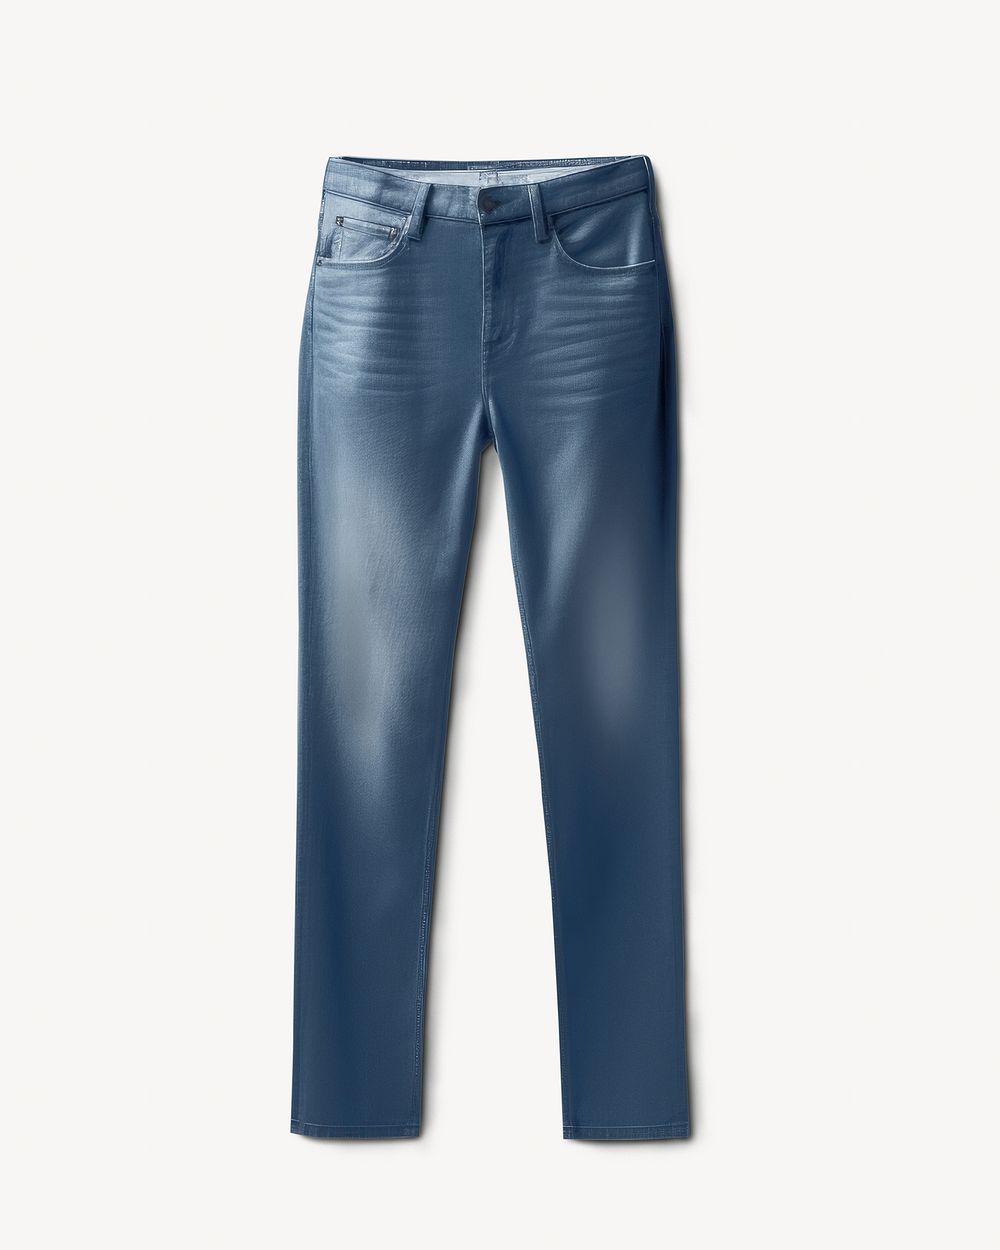 Streetwear jeans mockup flat lay